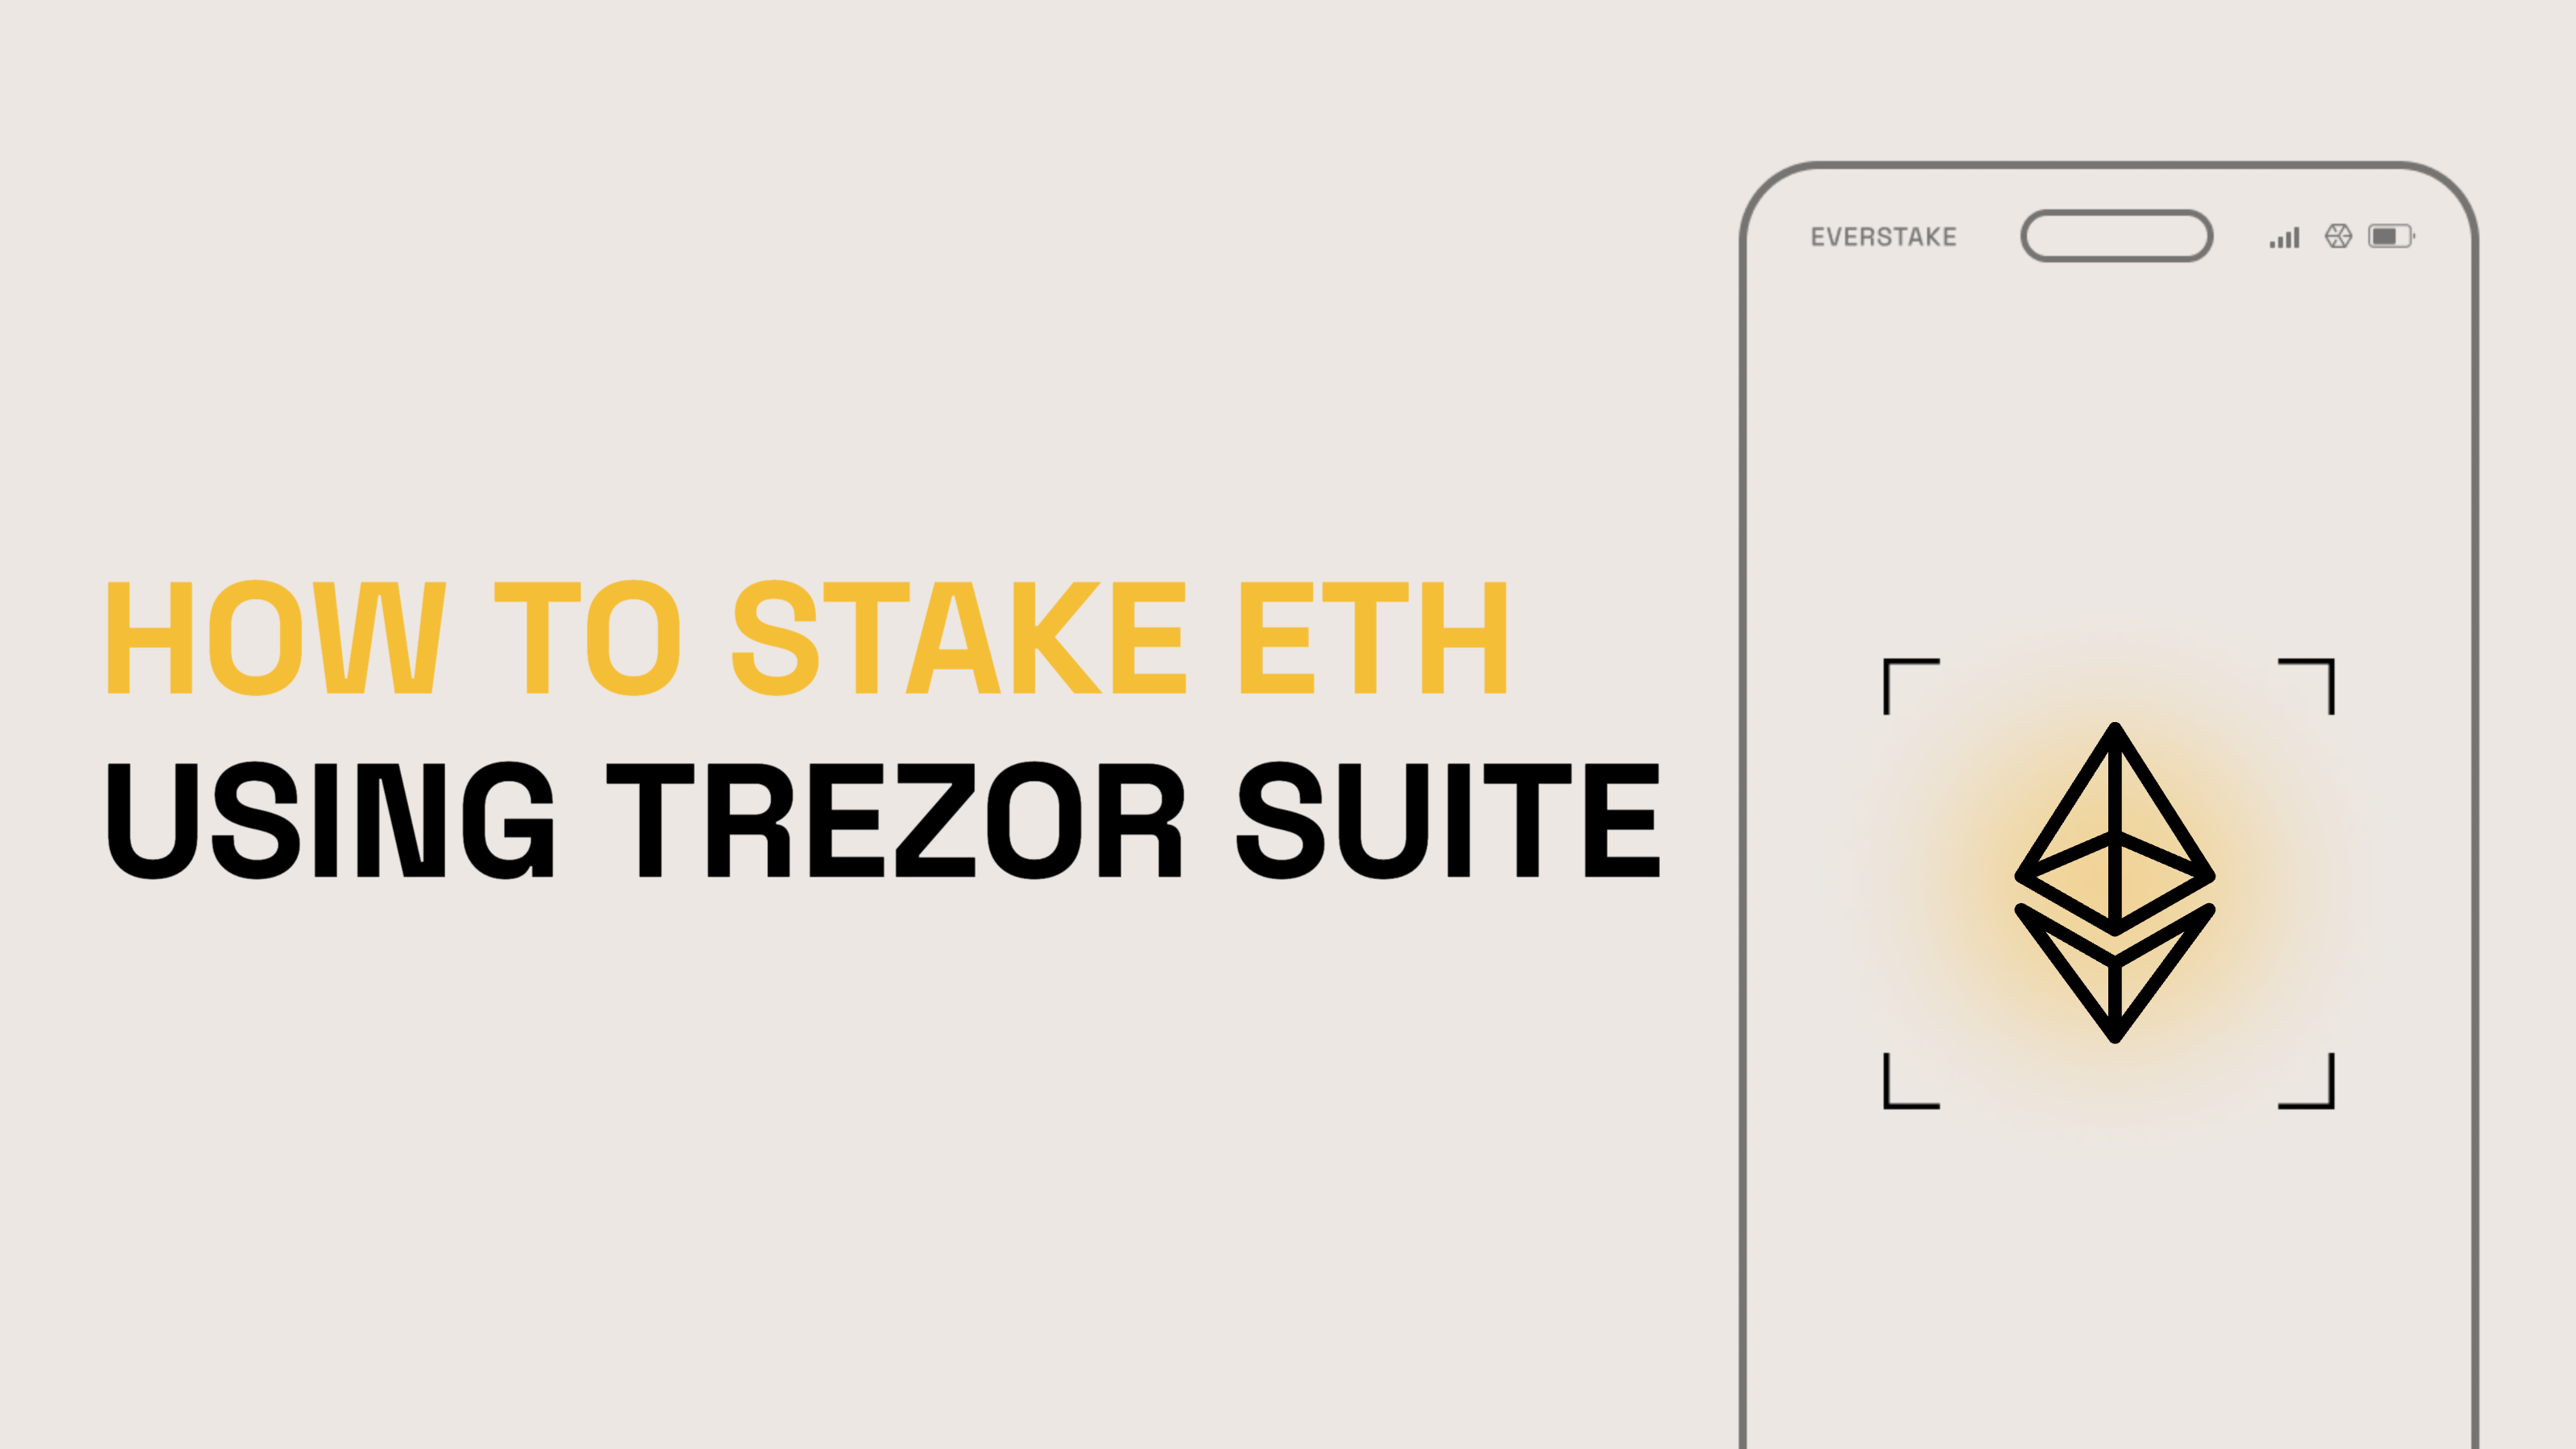 How to Stake ETH via Trezor Suite